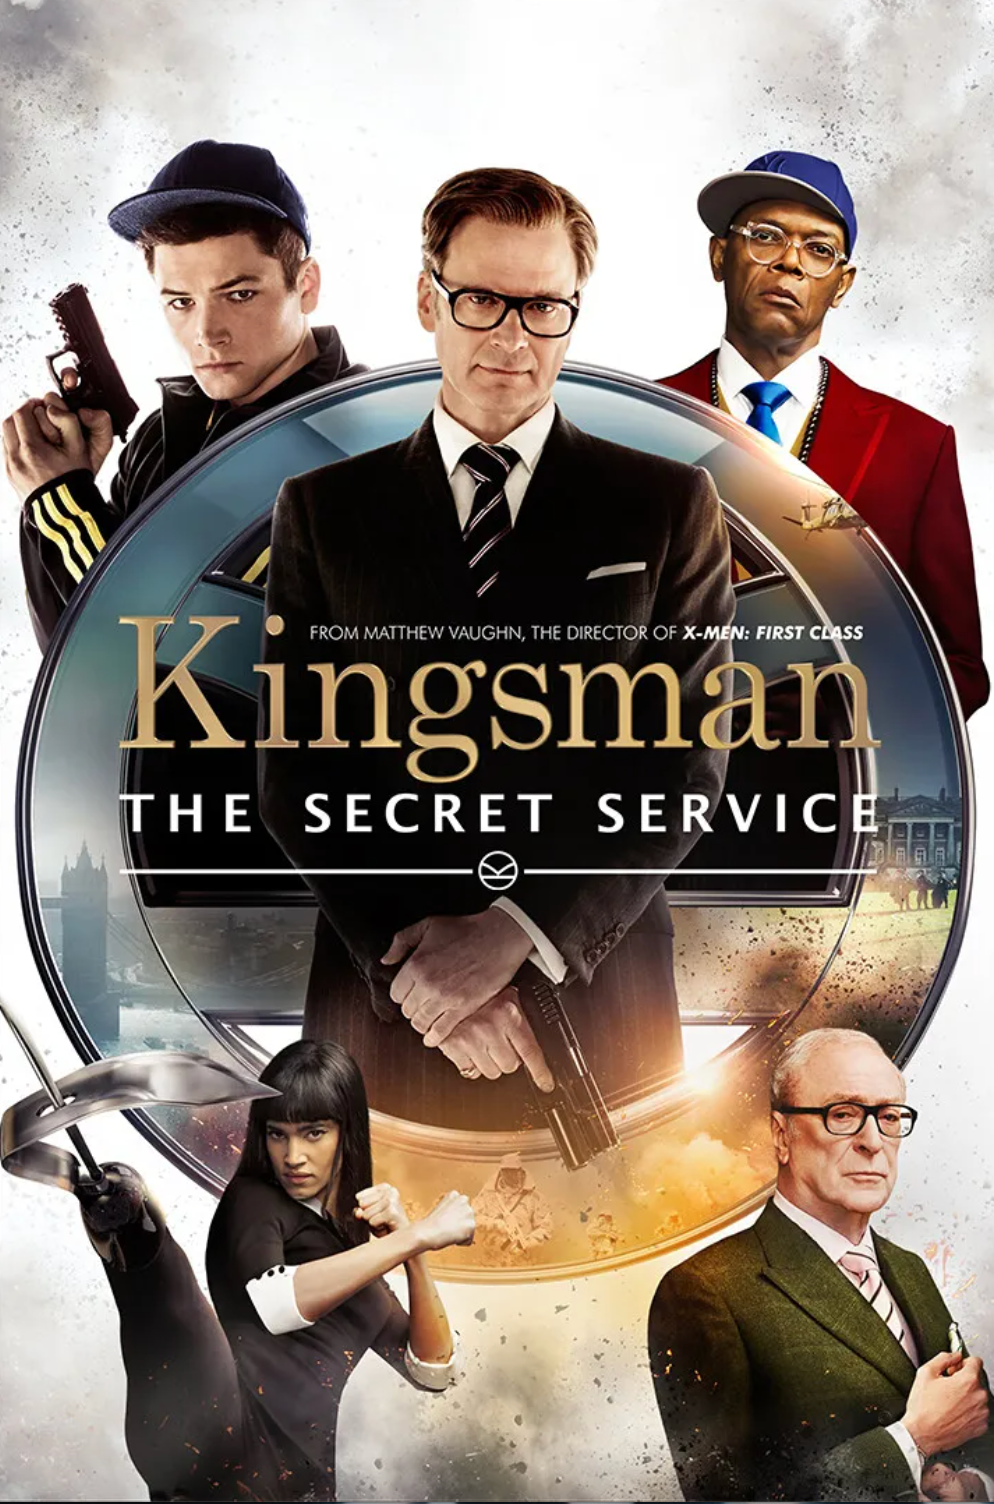 Movie poster for Kingsman: The Secret Service